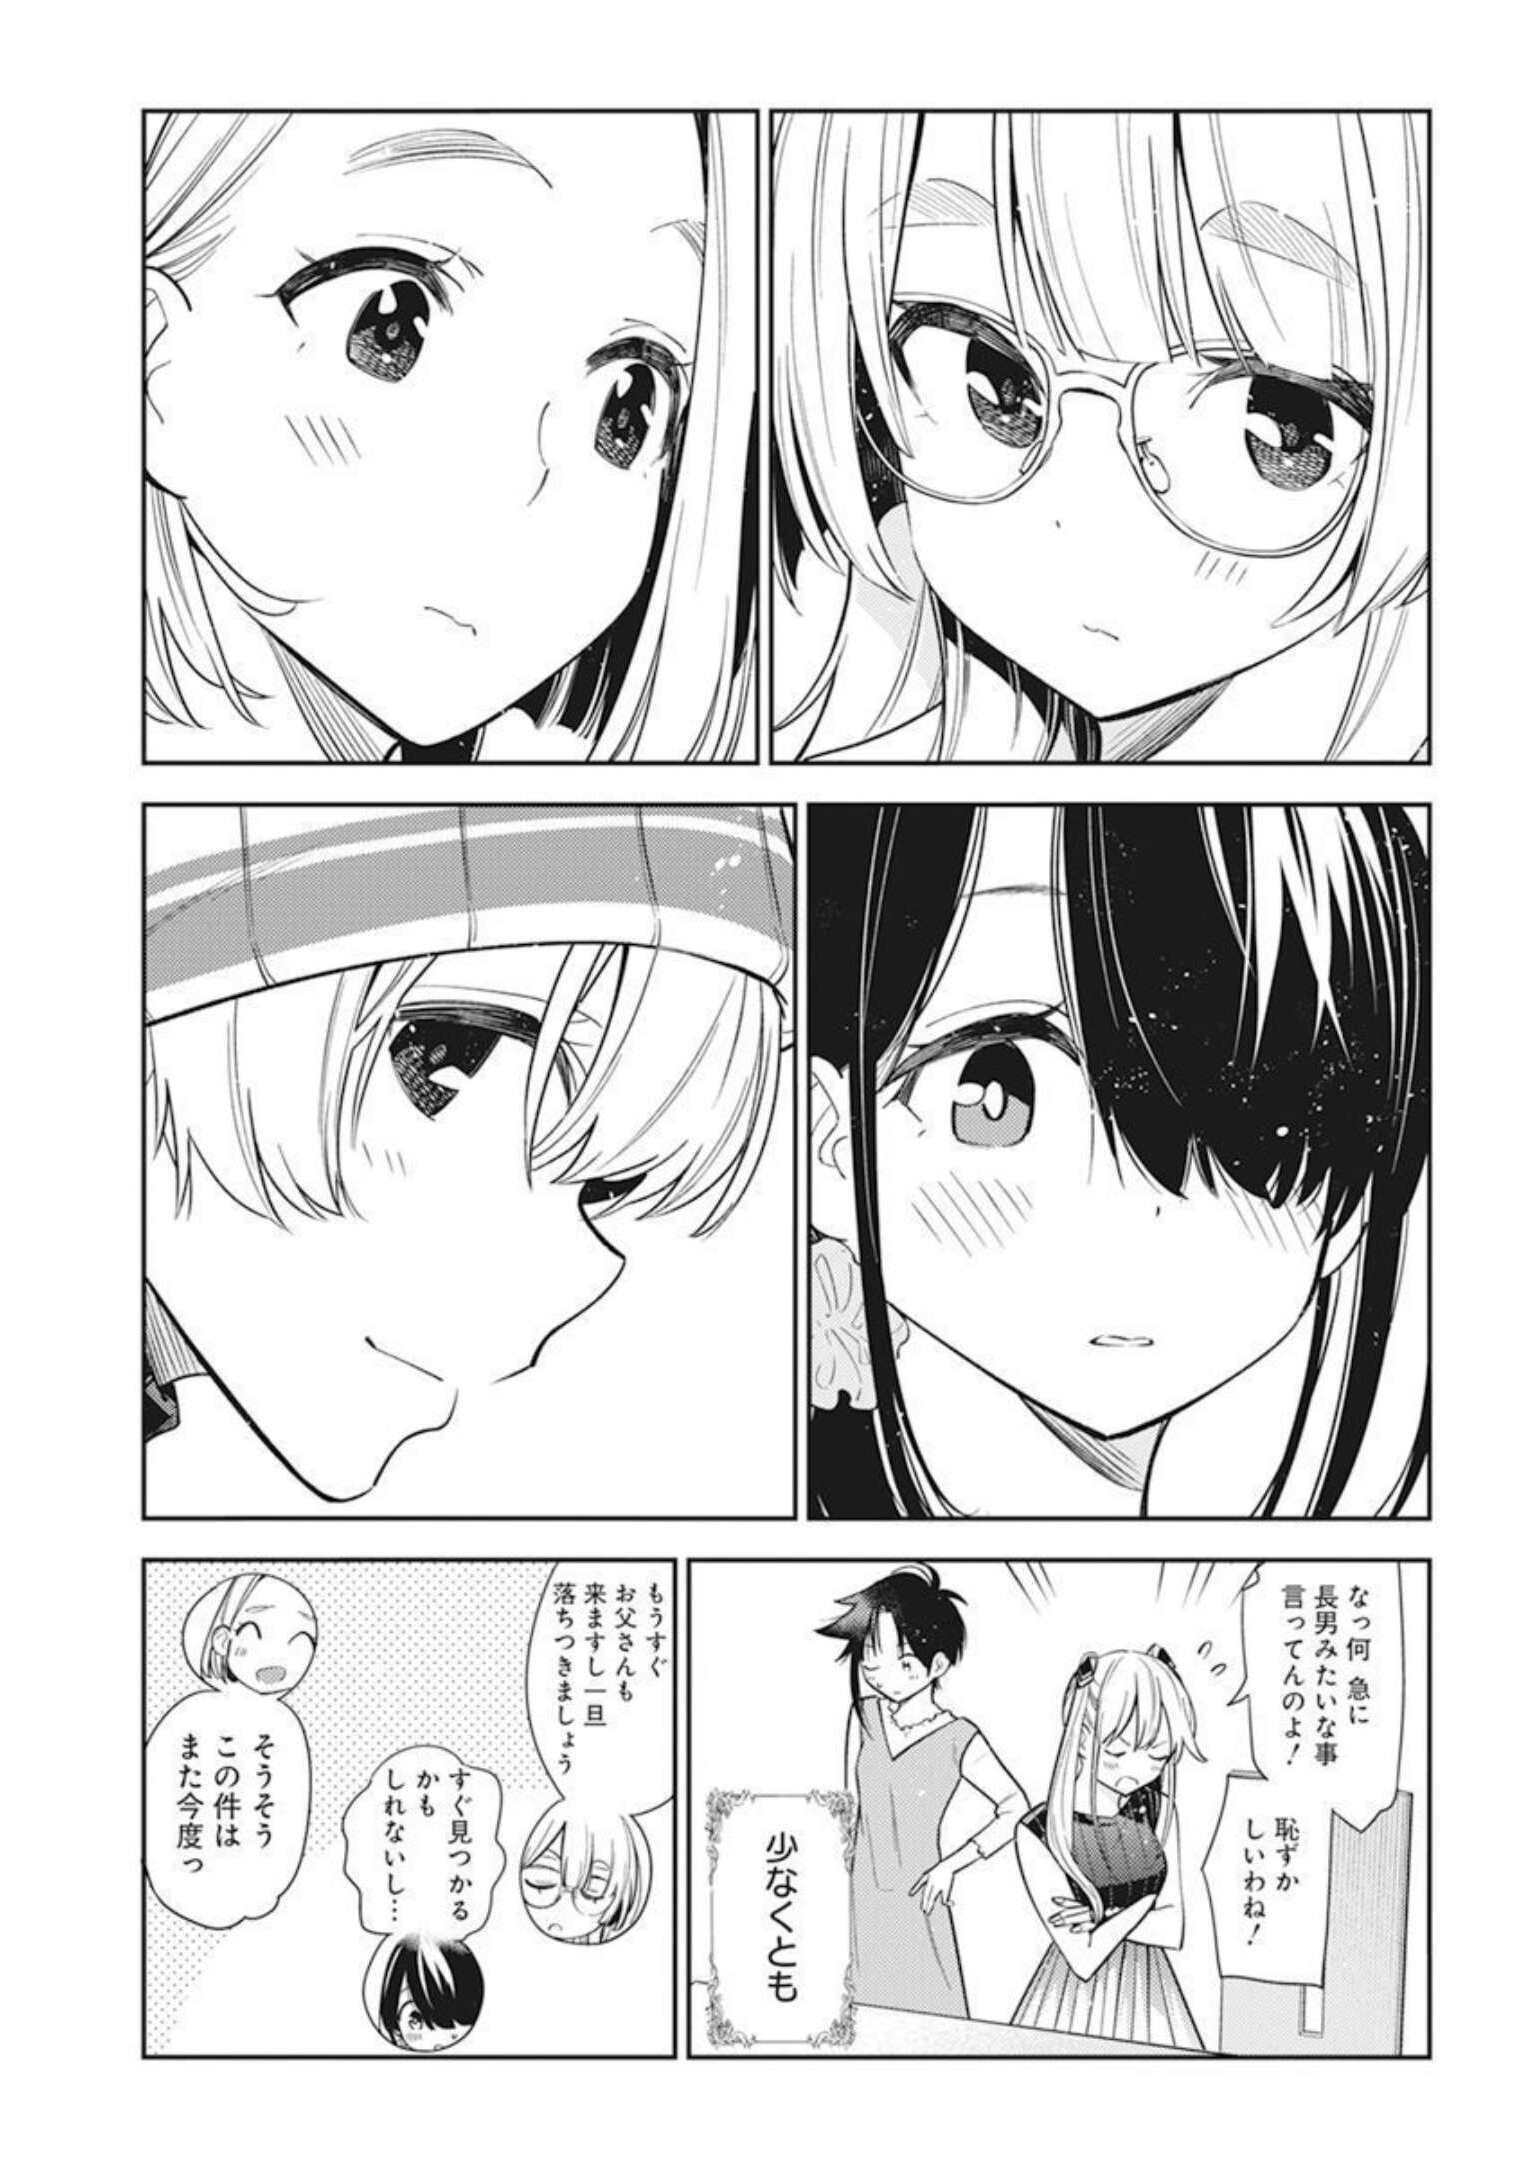 Shiunji-ke no Kodomotachi (Children of the Shiunji Family) - Chapter 01 - Page 48